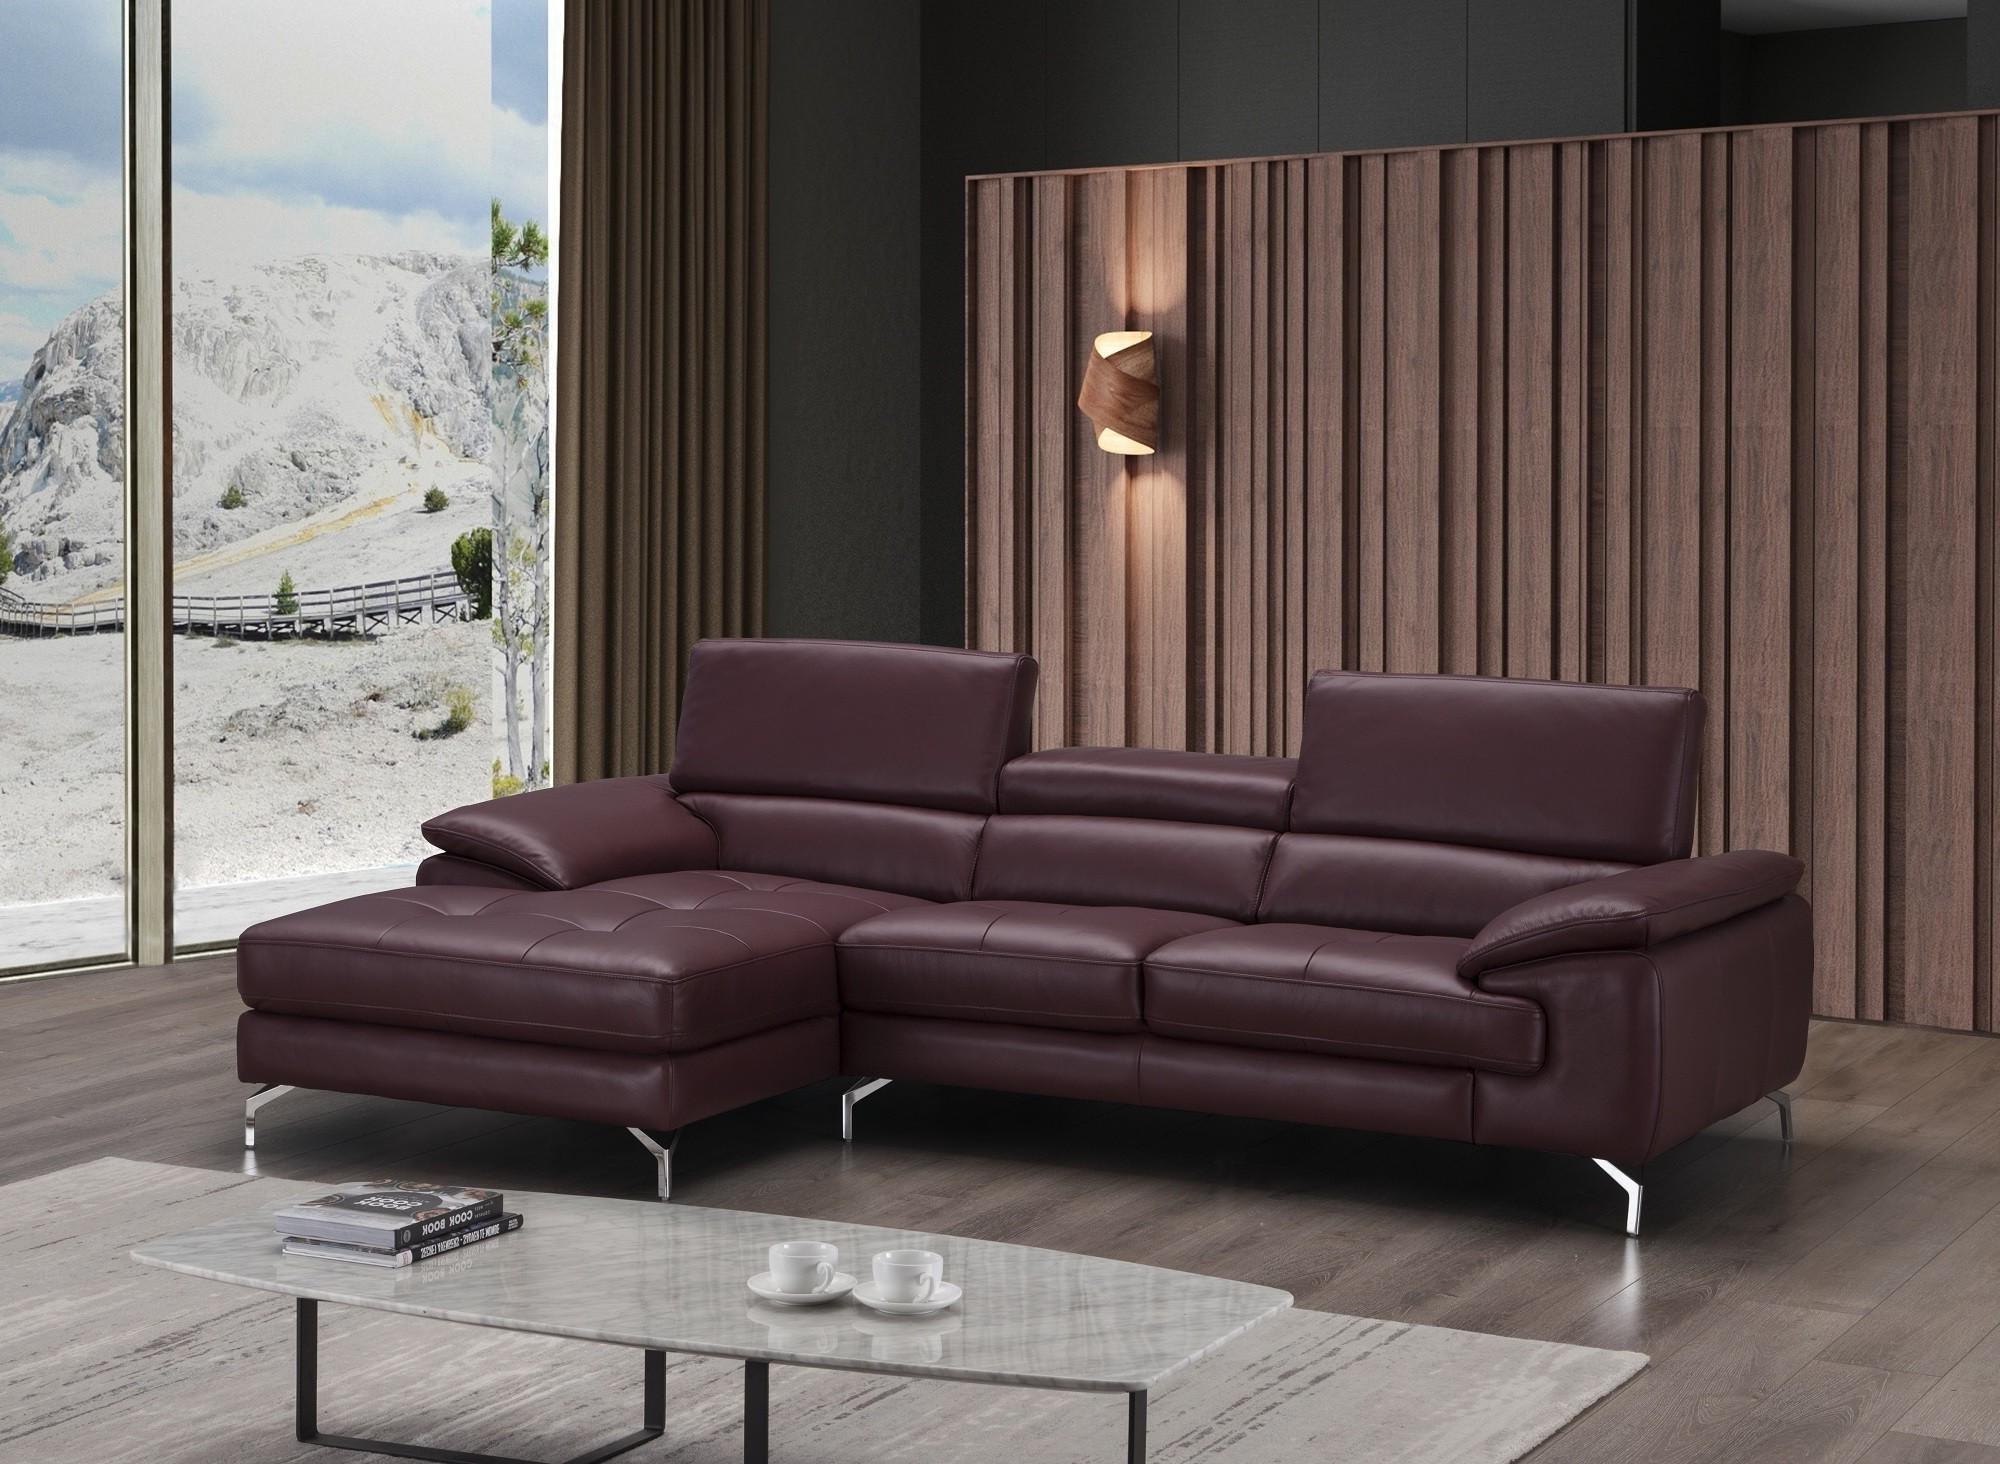 

    
Maroon Full Top Grain Italian Leather Sectional Sofa RHC Contemporary J&M A973b
